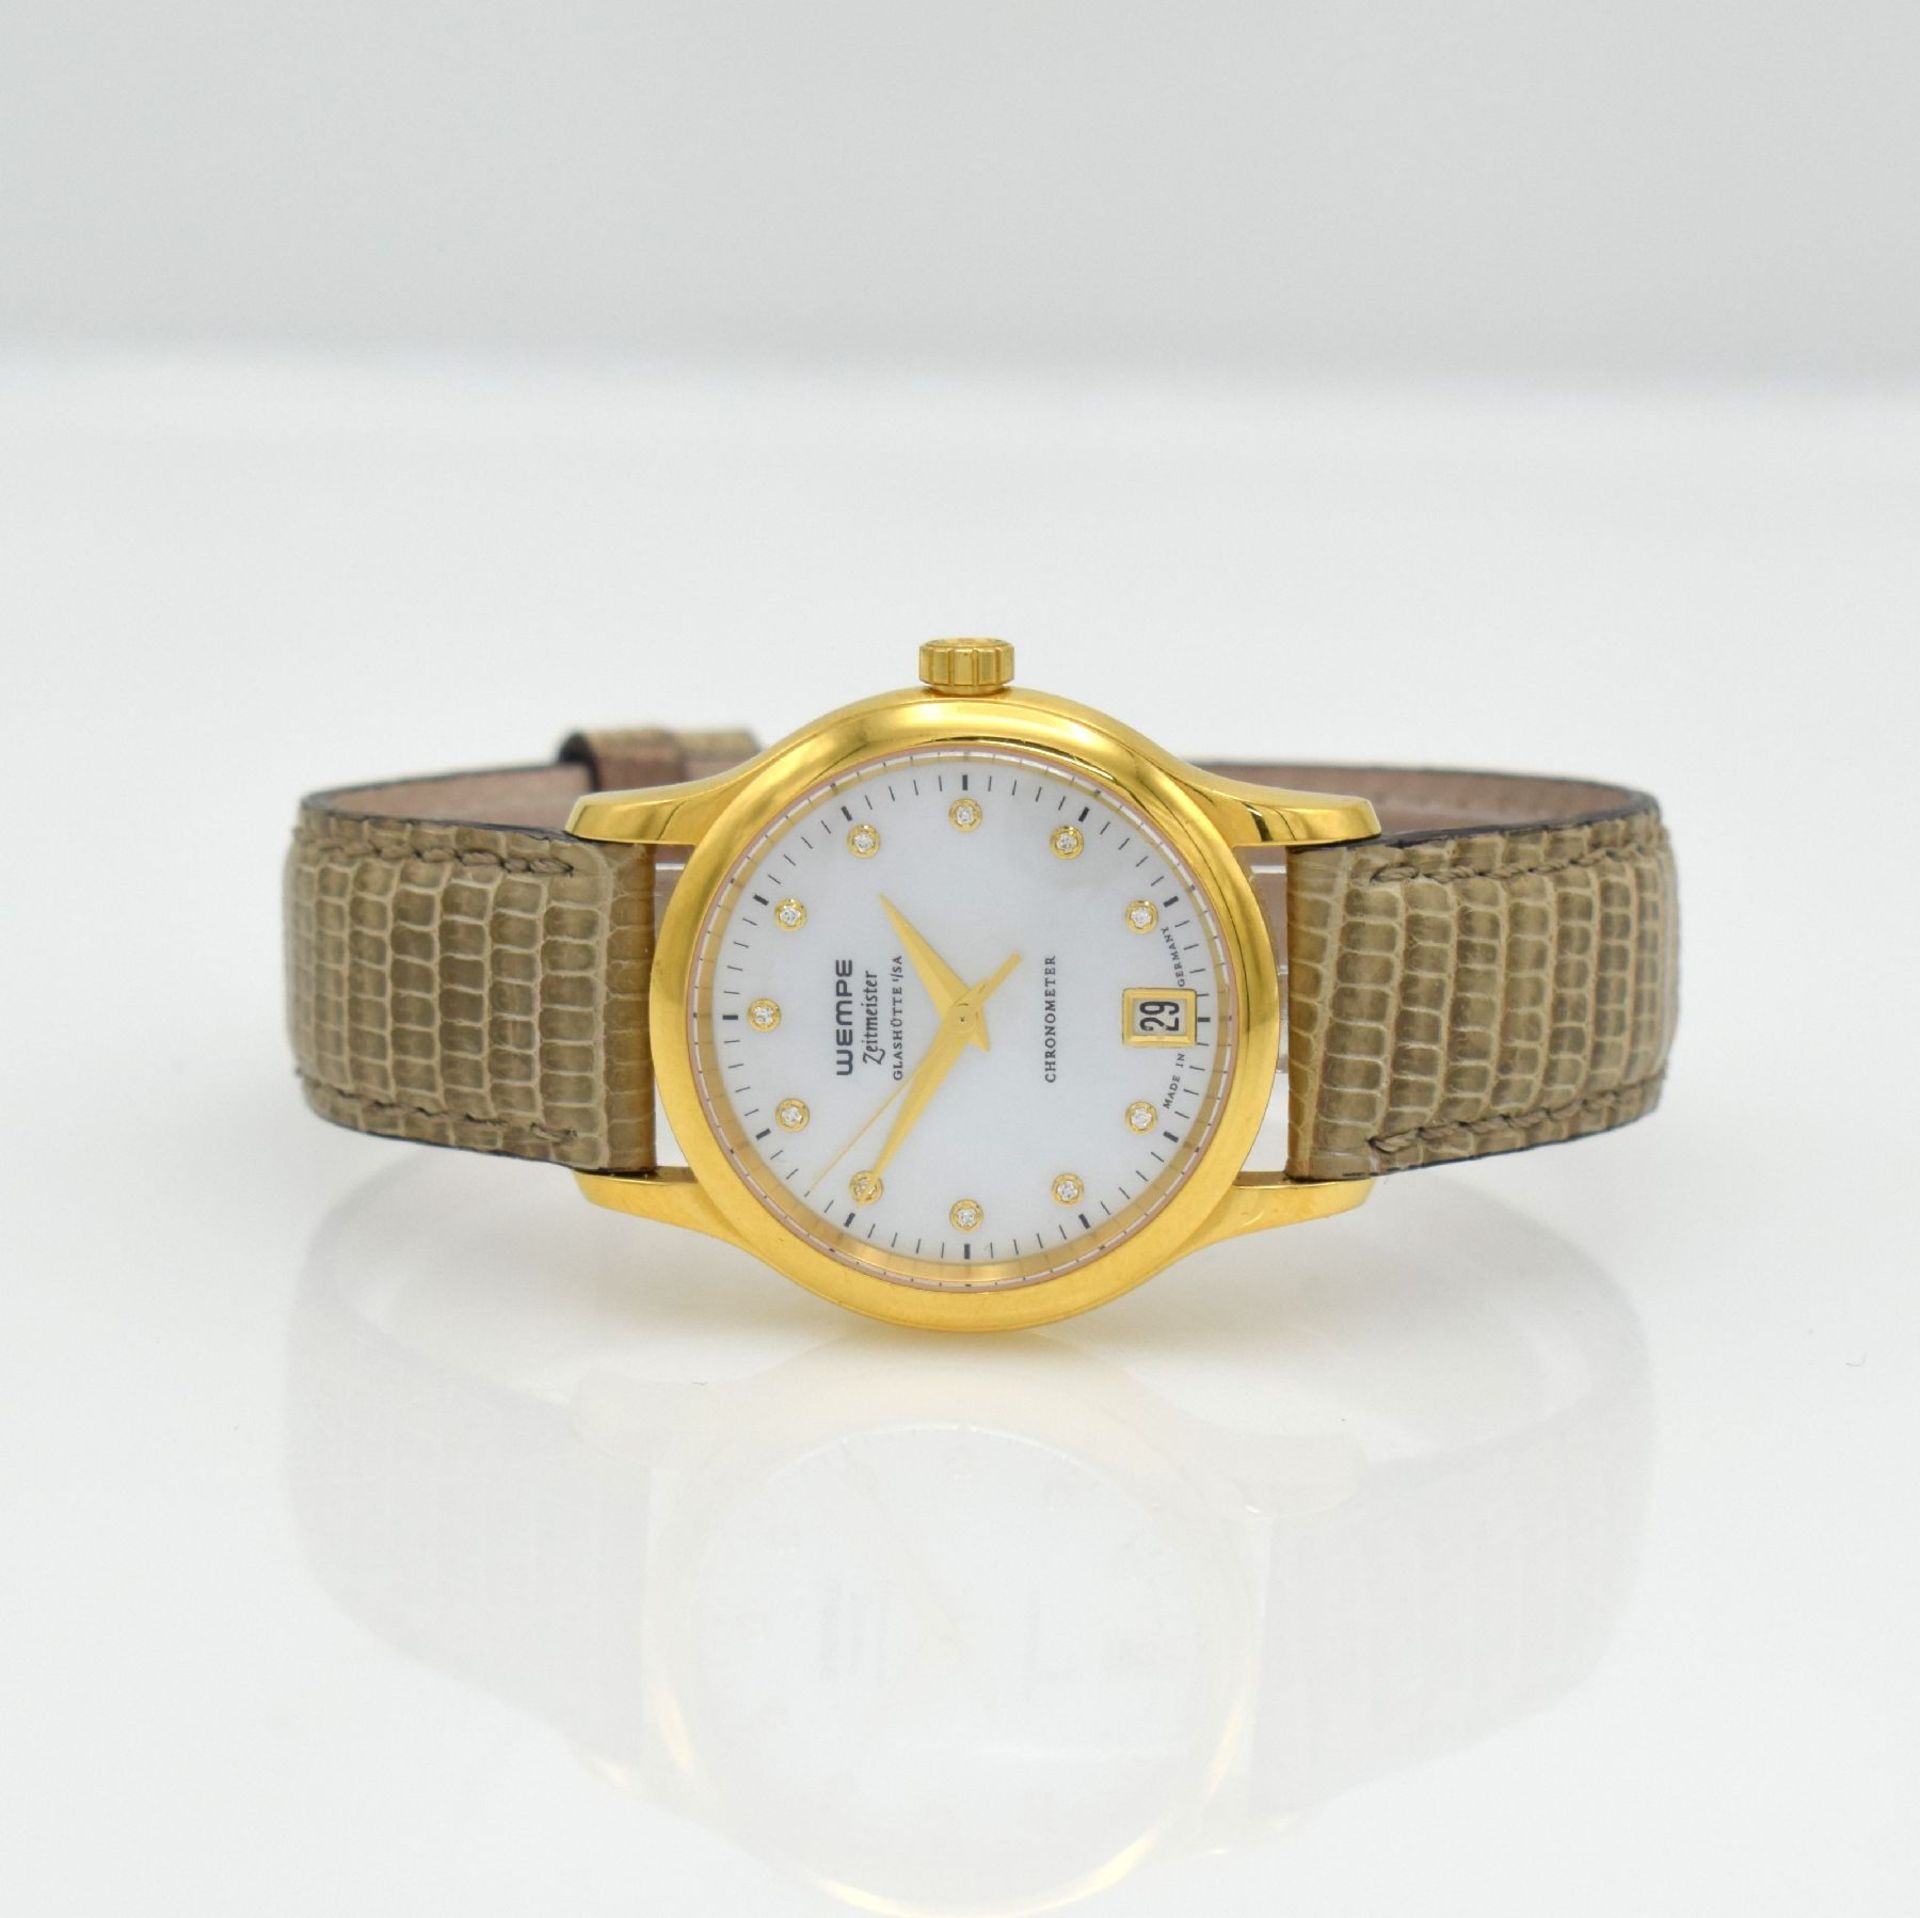 WEMPE Zeitmeister ladies wristwatch, Germany sold in June 2015 according to certificate, quartz,